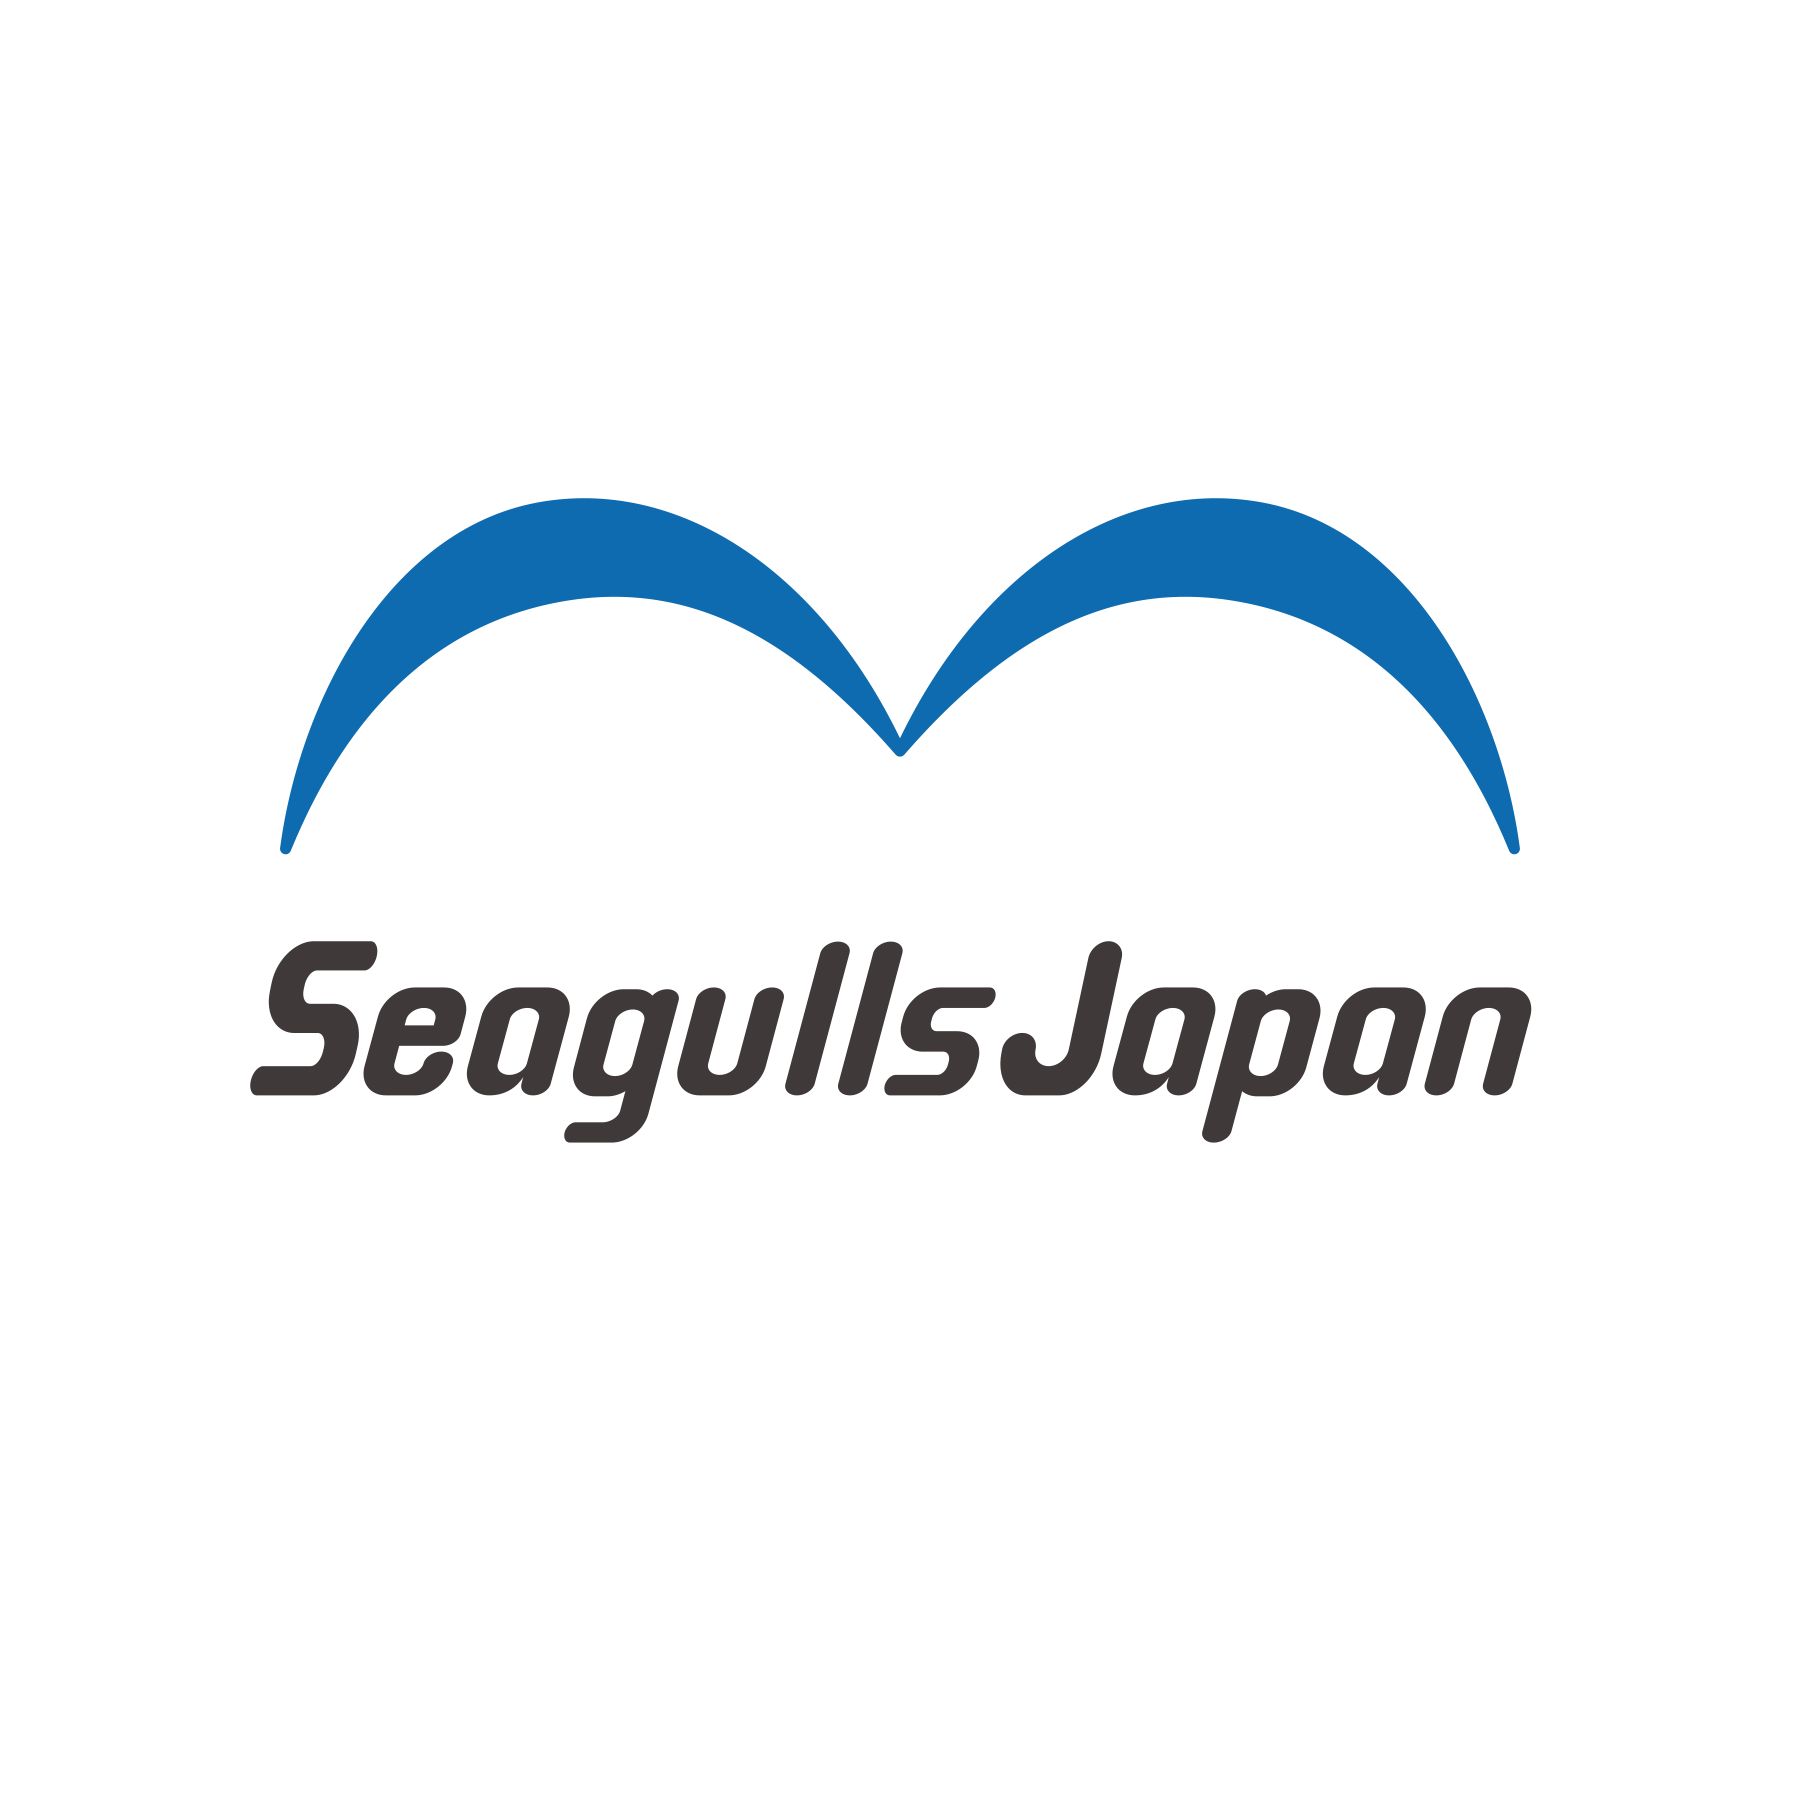 Seagulls Japan